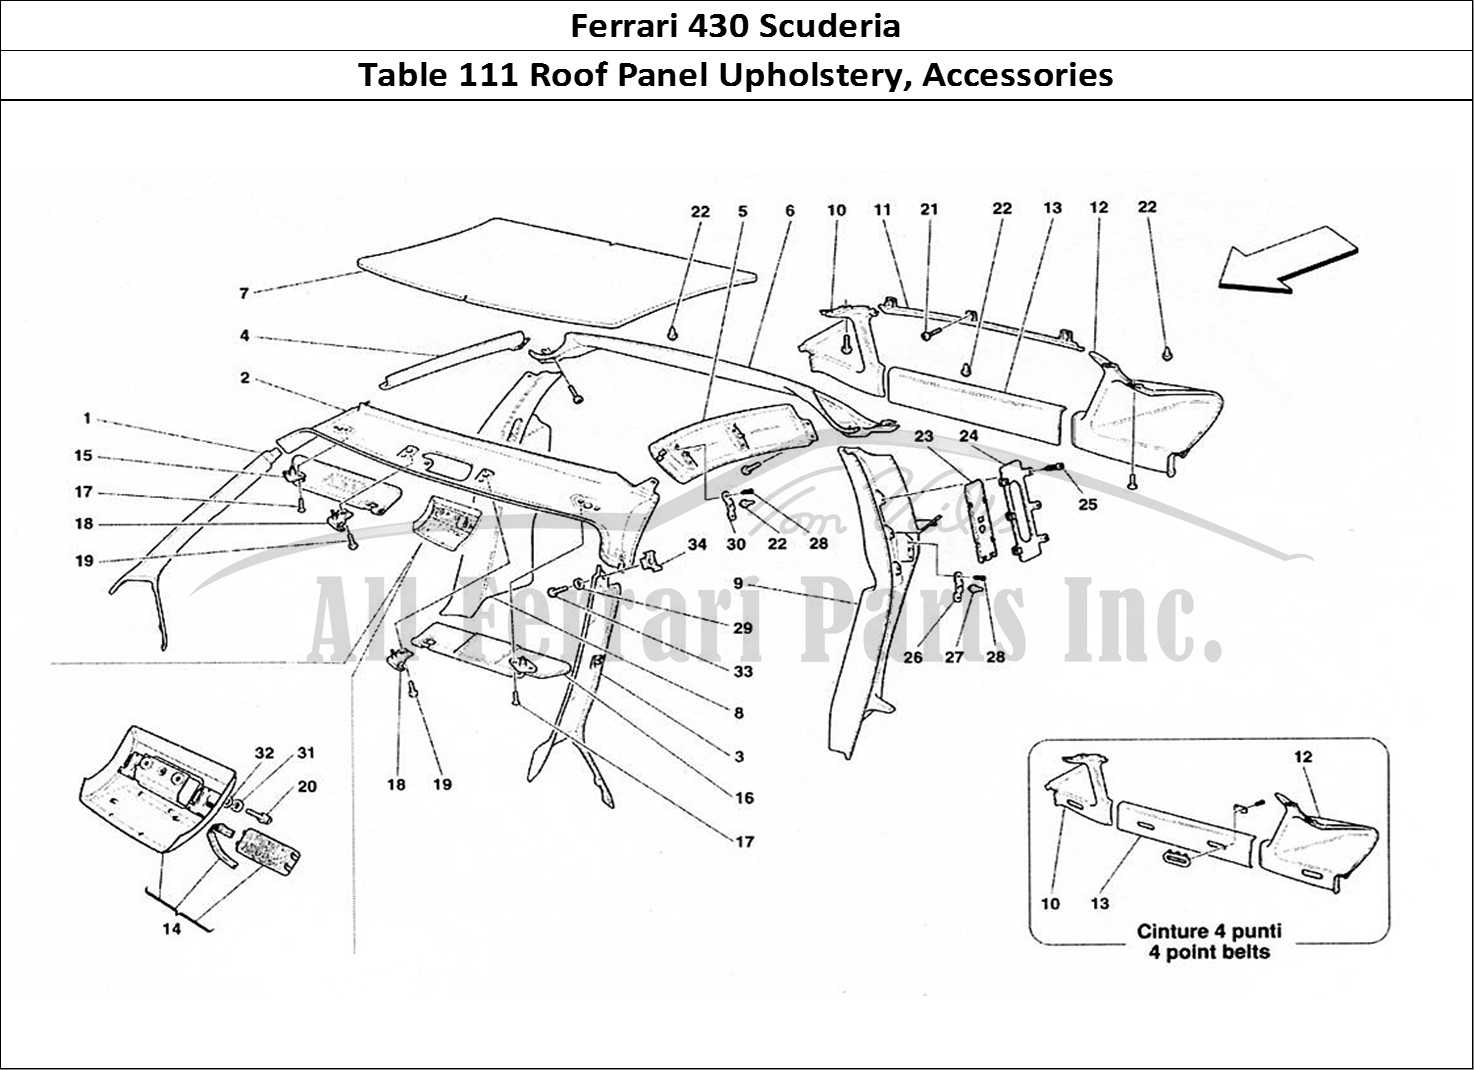 Ferrari Parts Ferrari 430 Scuderia Page 111 Roof Panel Upholstery and